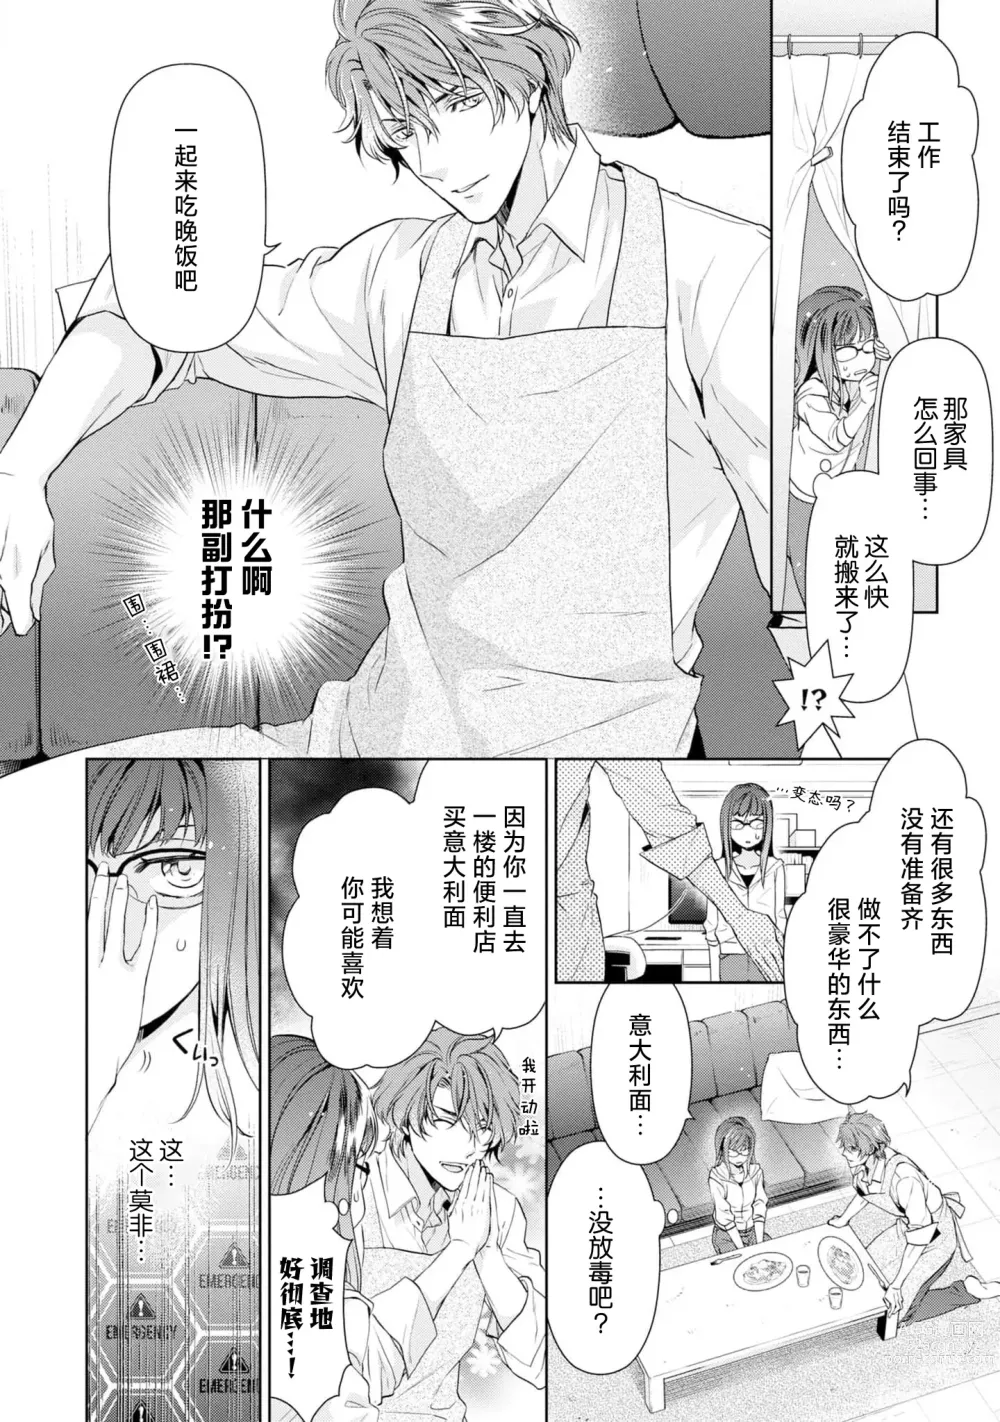 Page 23 of manga 消极小姐和乐观先生~触摸上司的那个并进行反击!?~ 1-5 + Extra